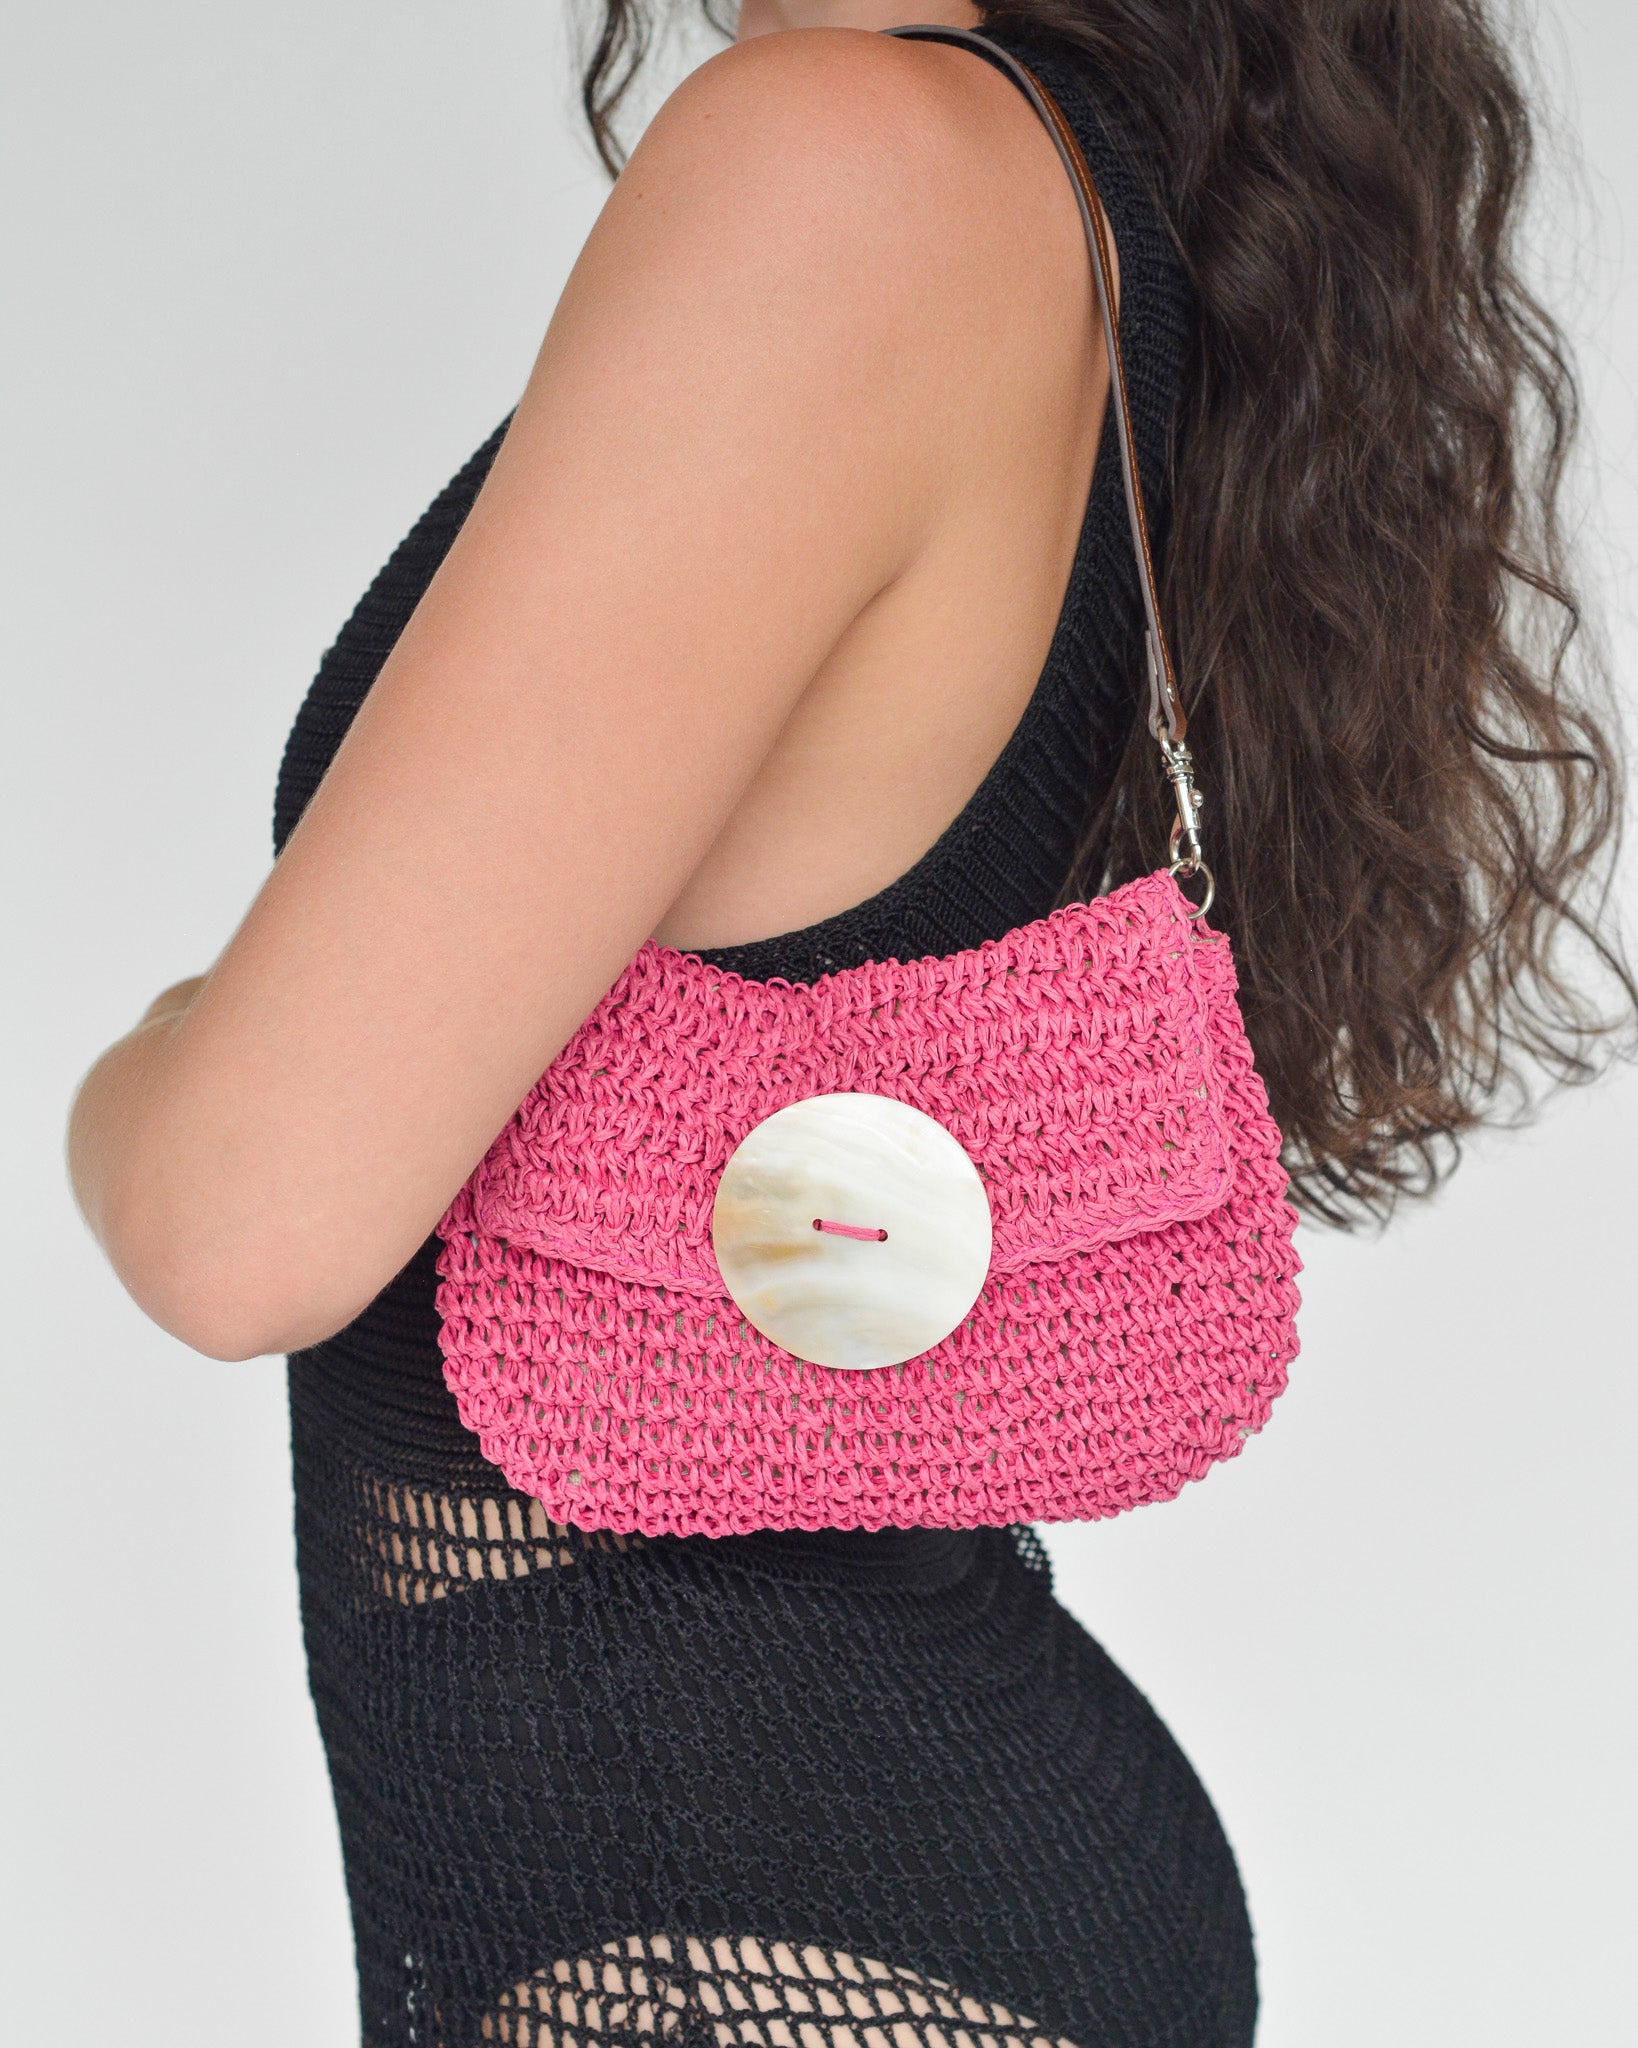 Vintage pink woven mini shell purse.